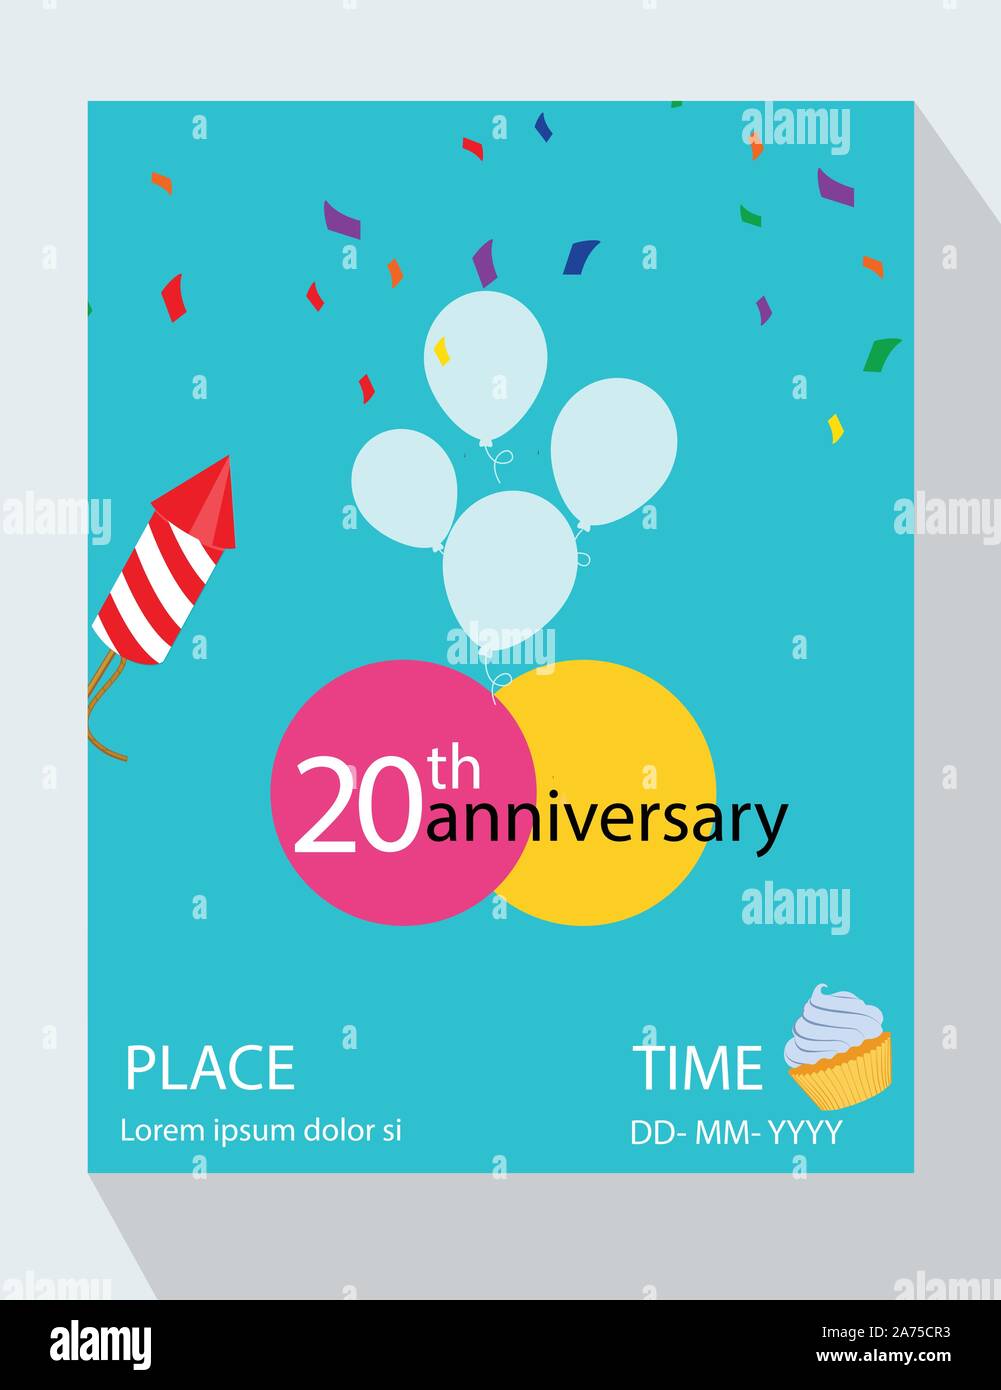 Birthday party invitation card. You are invited! Happy 20th birthday anniversary! Stock Vector